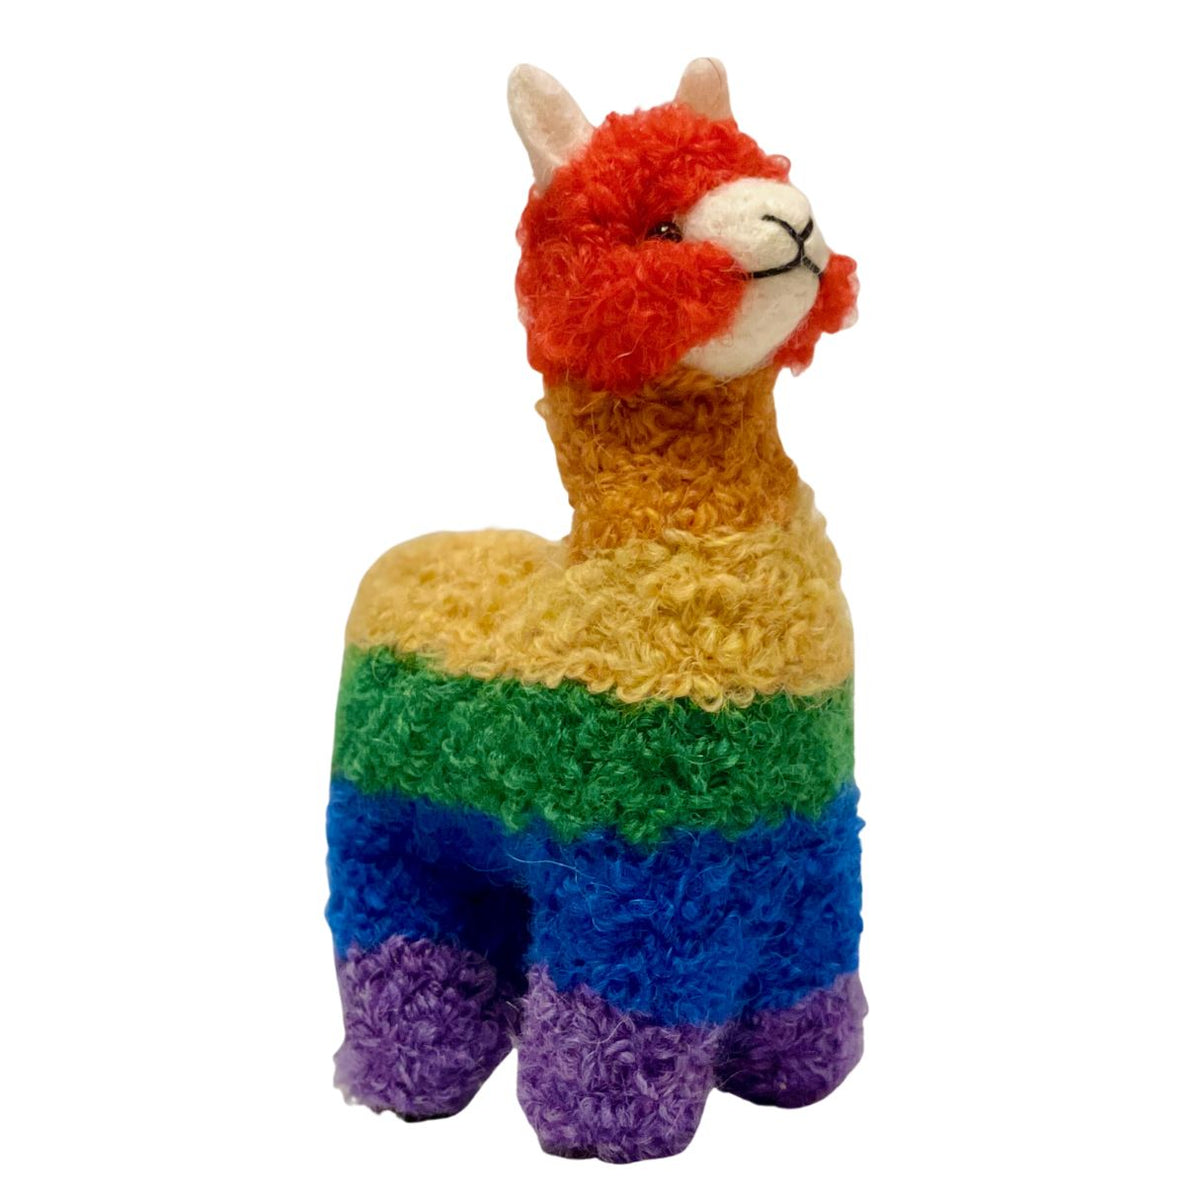 Colorful Rainbow pride alpaca figure made with real alpaca yarn for rainbow stripes